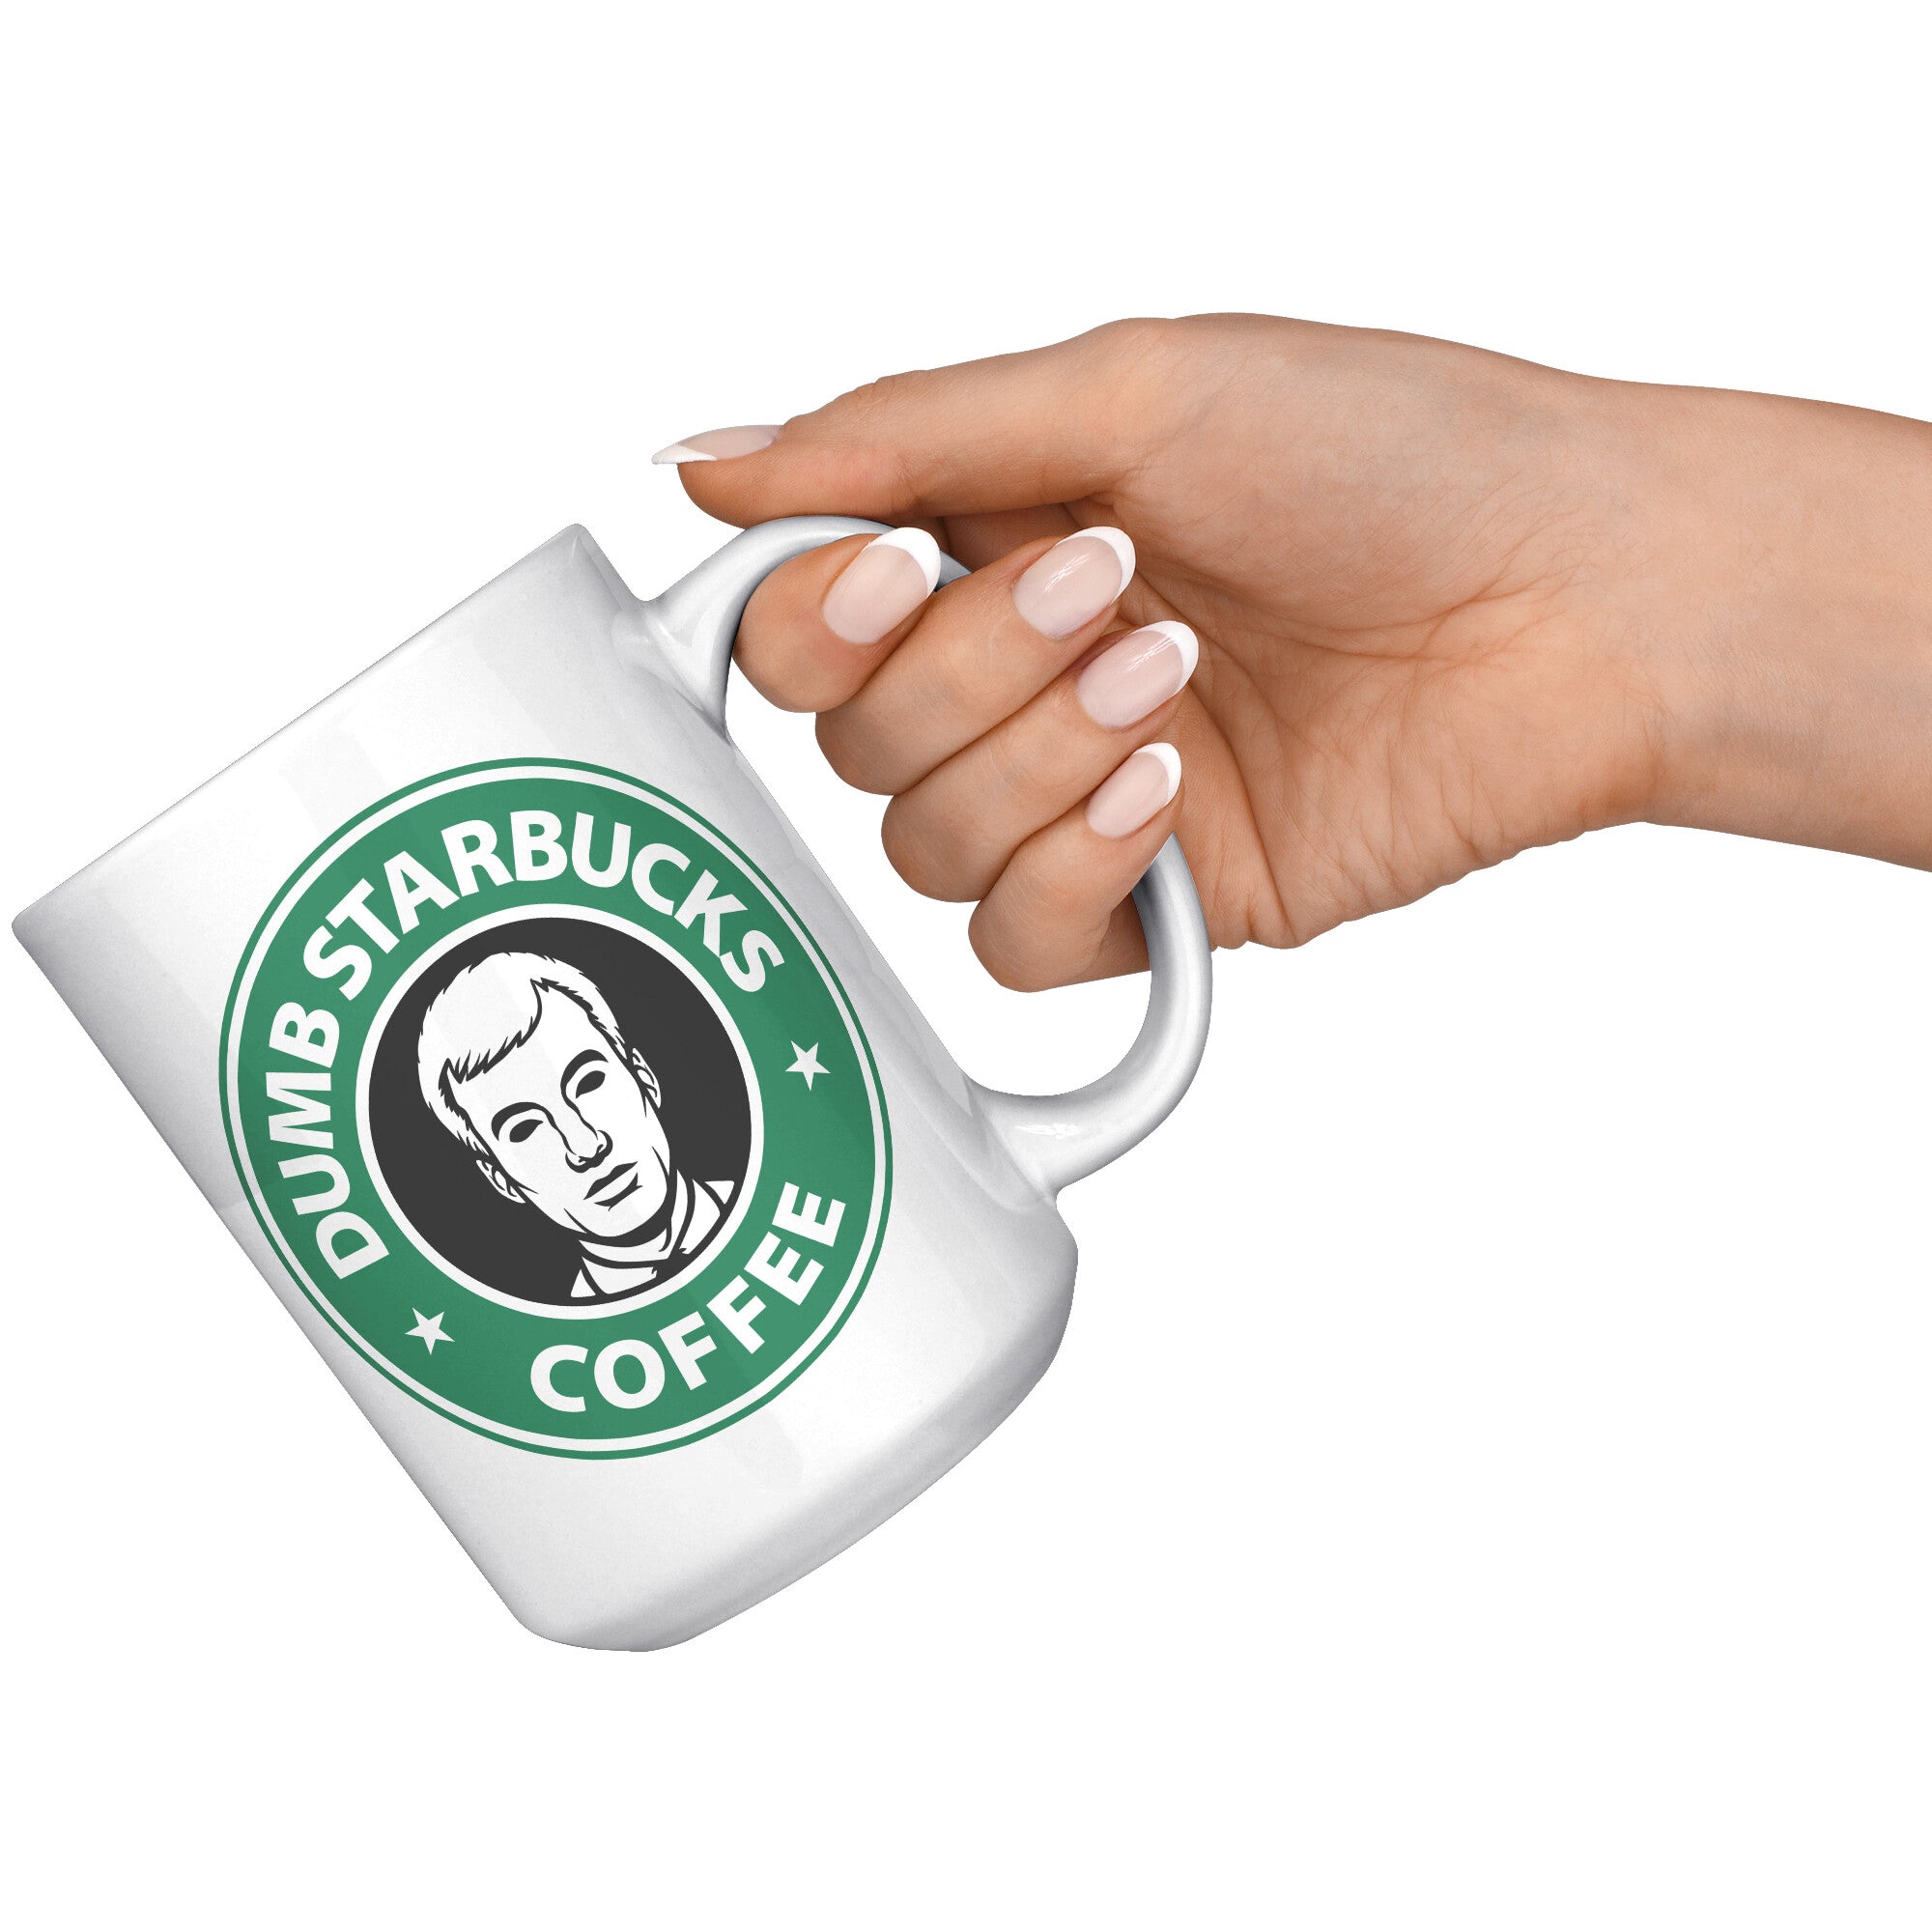 Nathan for You Dumb Starbucks Coffee Mug by BeeGeeTees (11 oz)